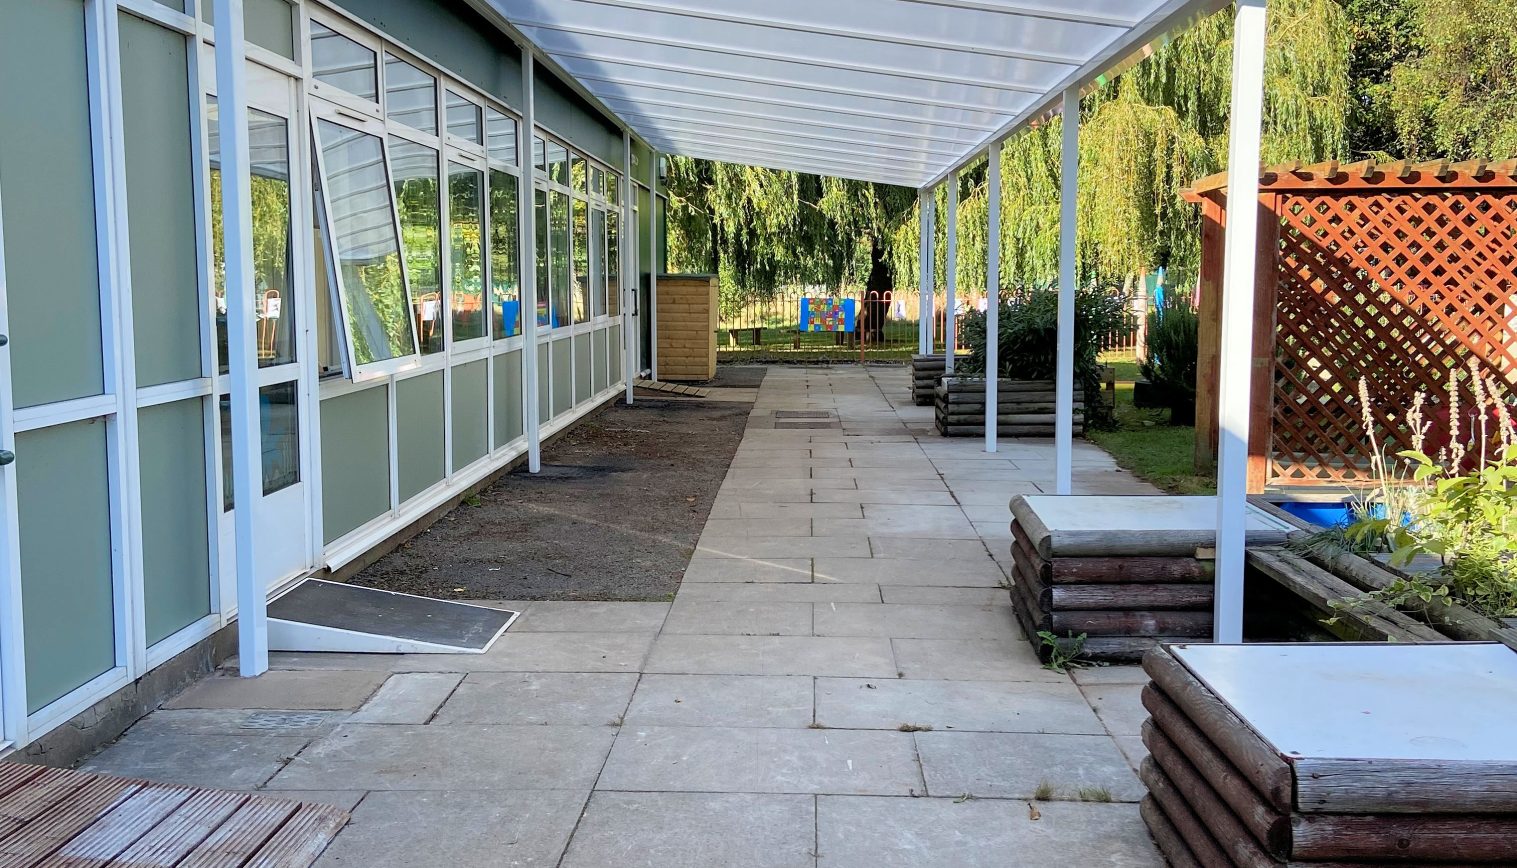 Woodlands Primary School & Nursery – Free Standing Canopy